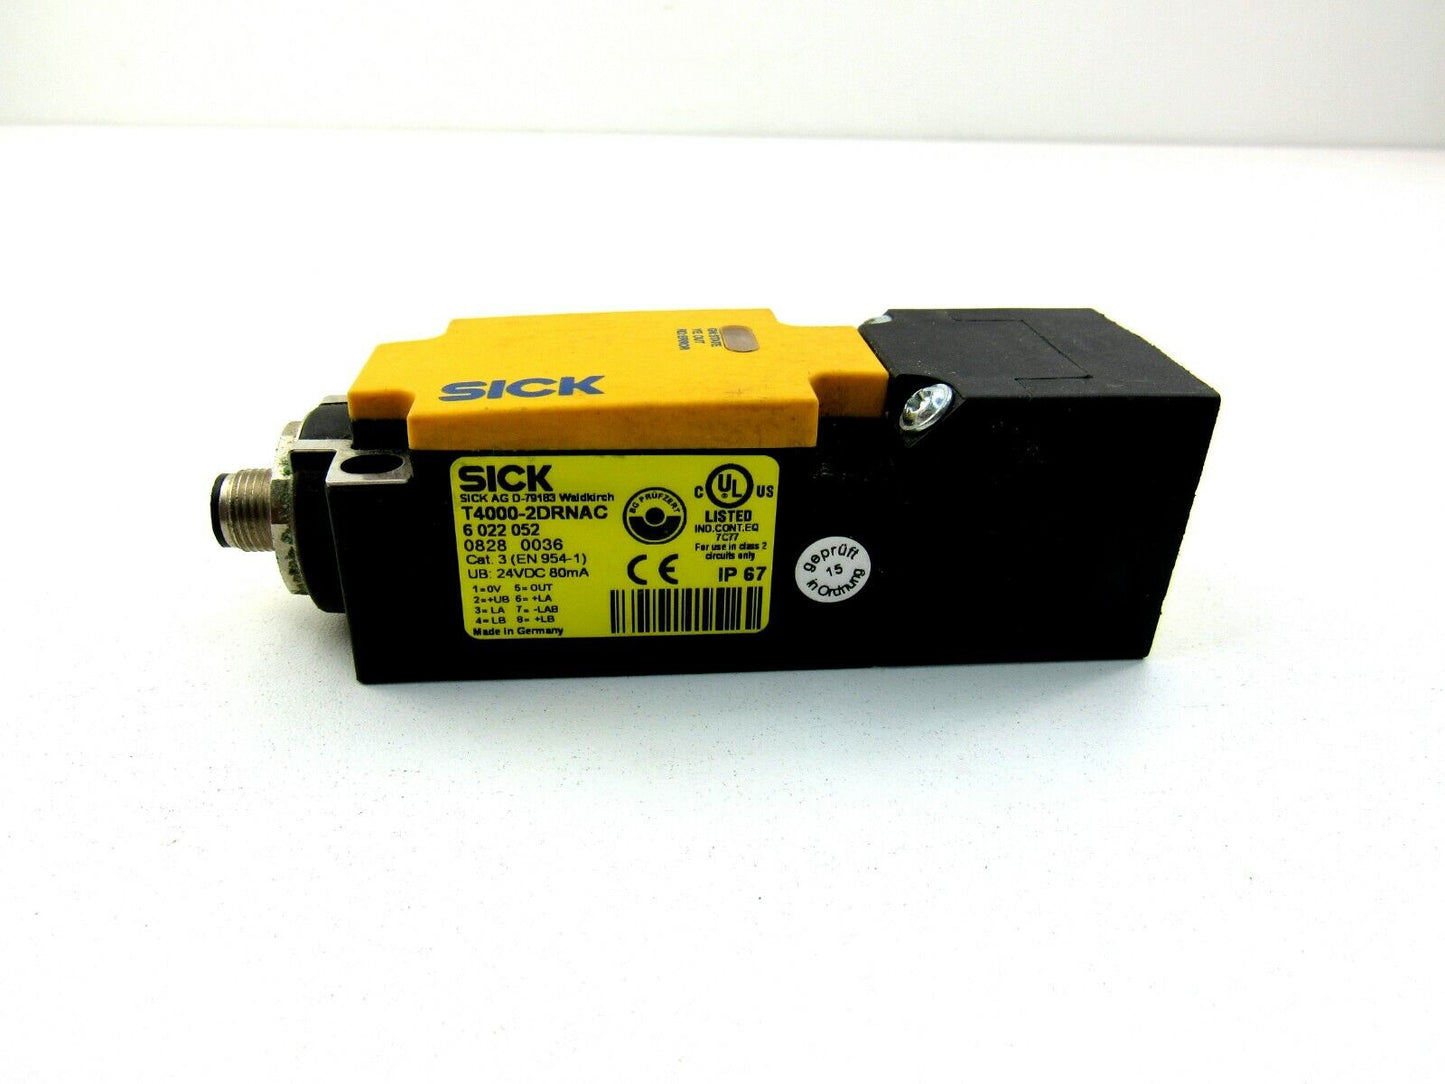 SICK  T4000 2DRNAC 6022052 0828 0036  Safety Switch